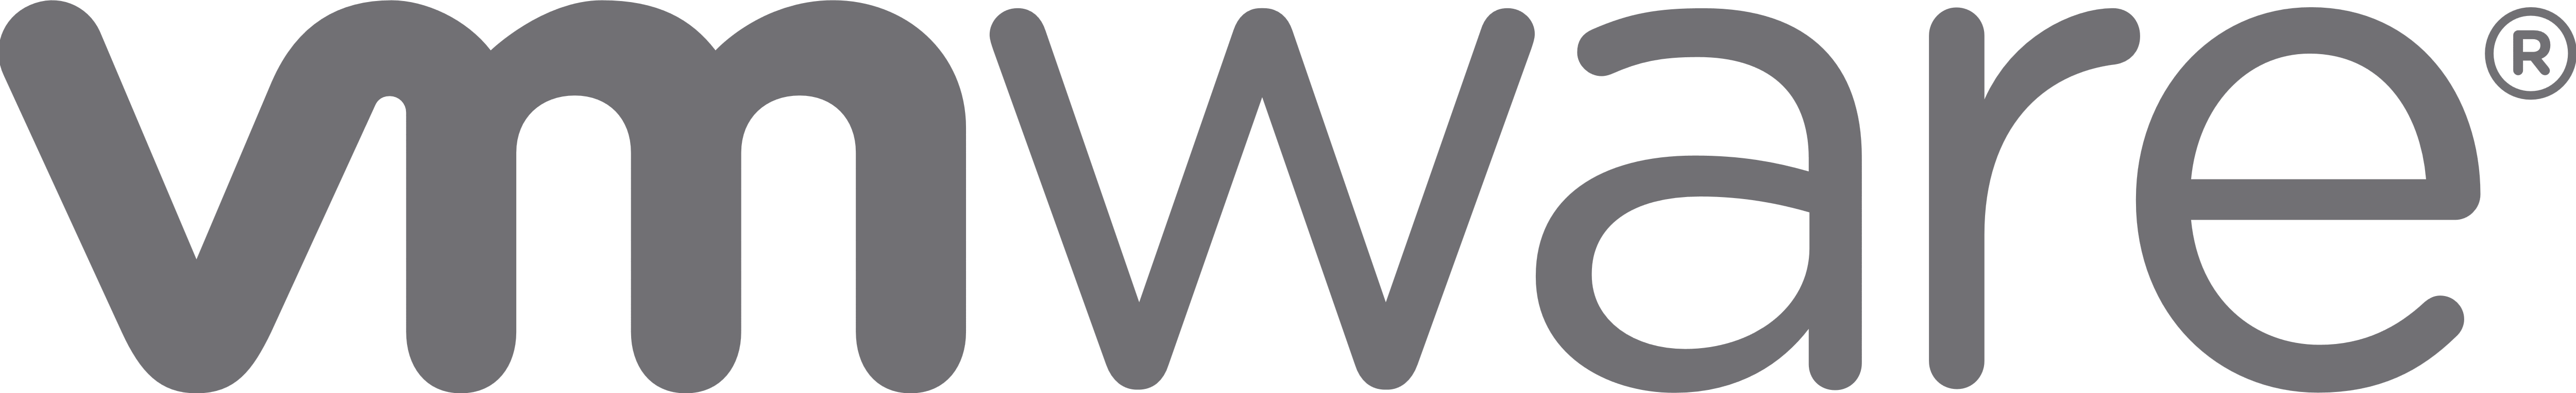 Vmware Png Logo.